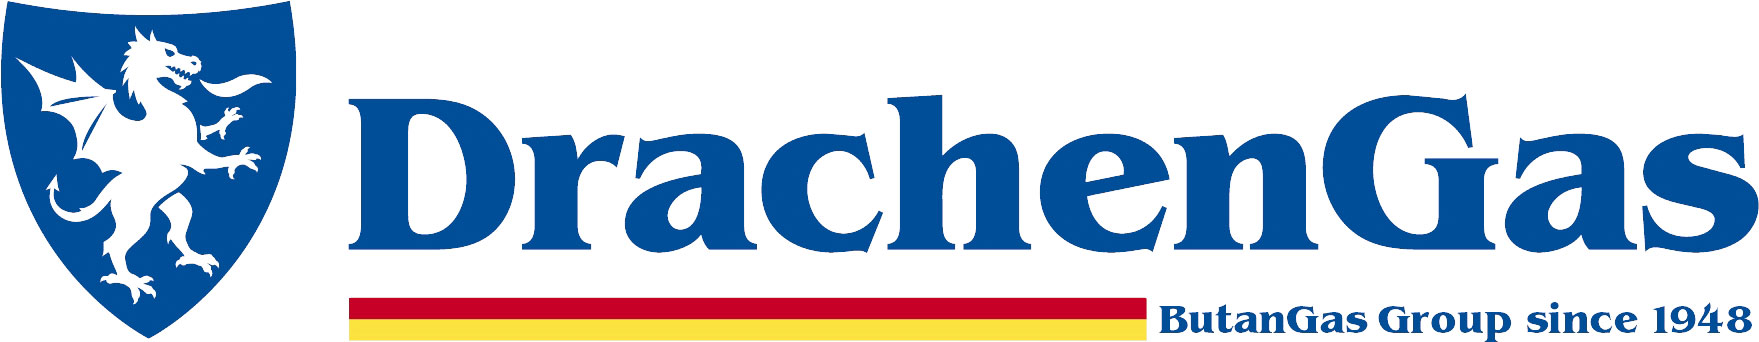 Drachengas_logo